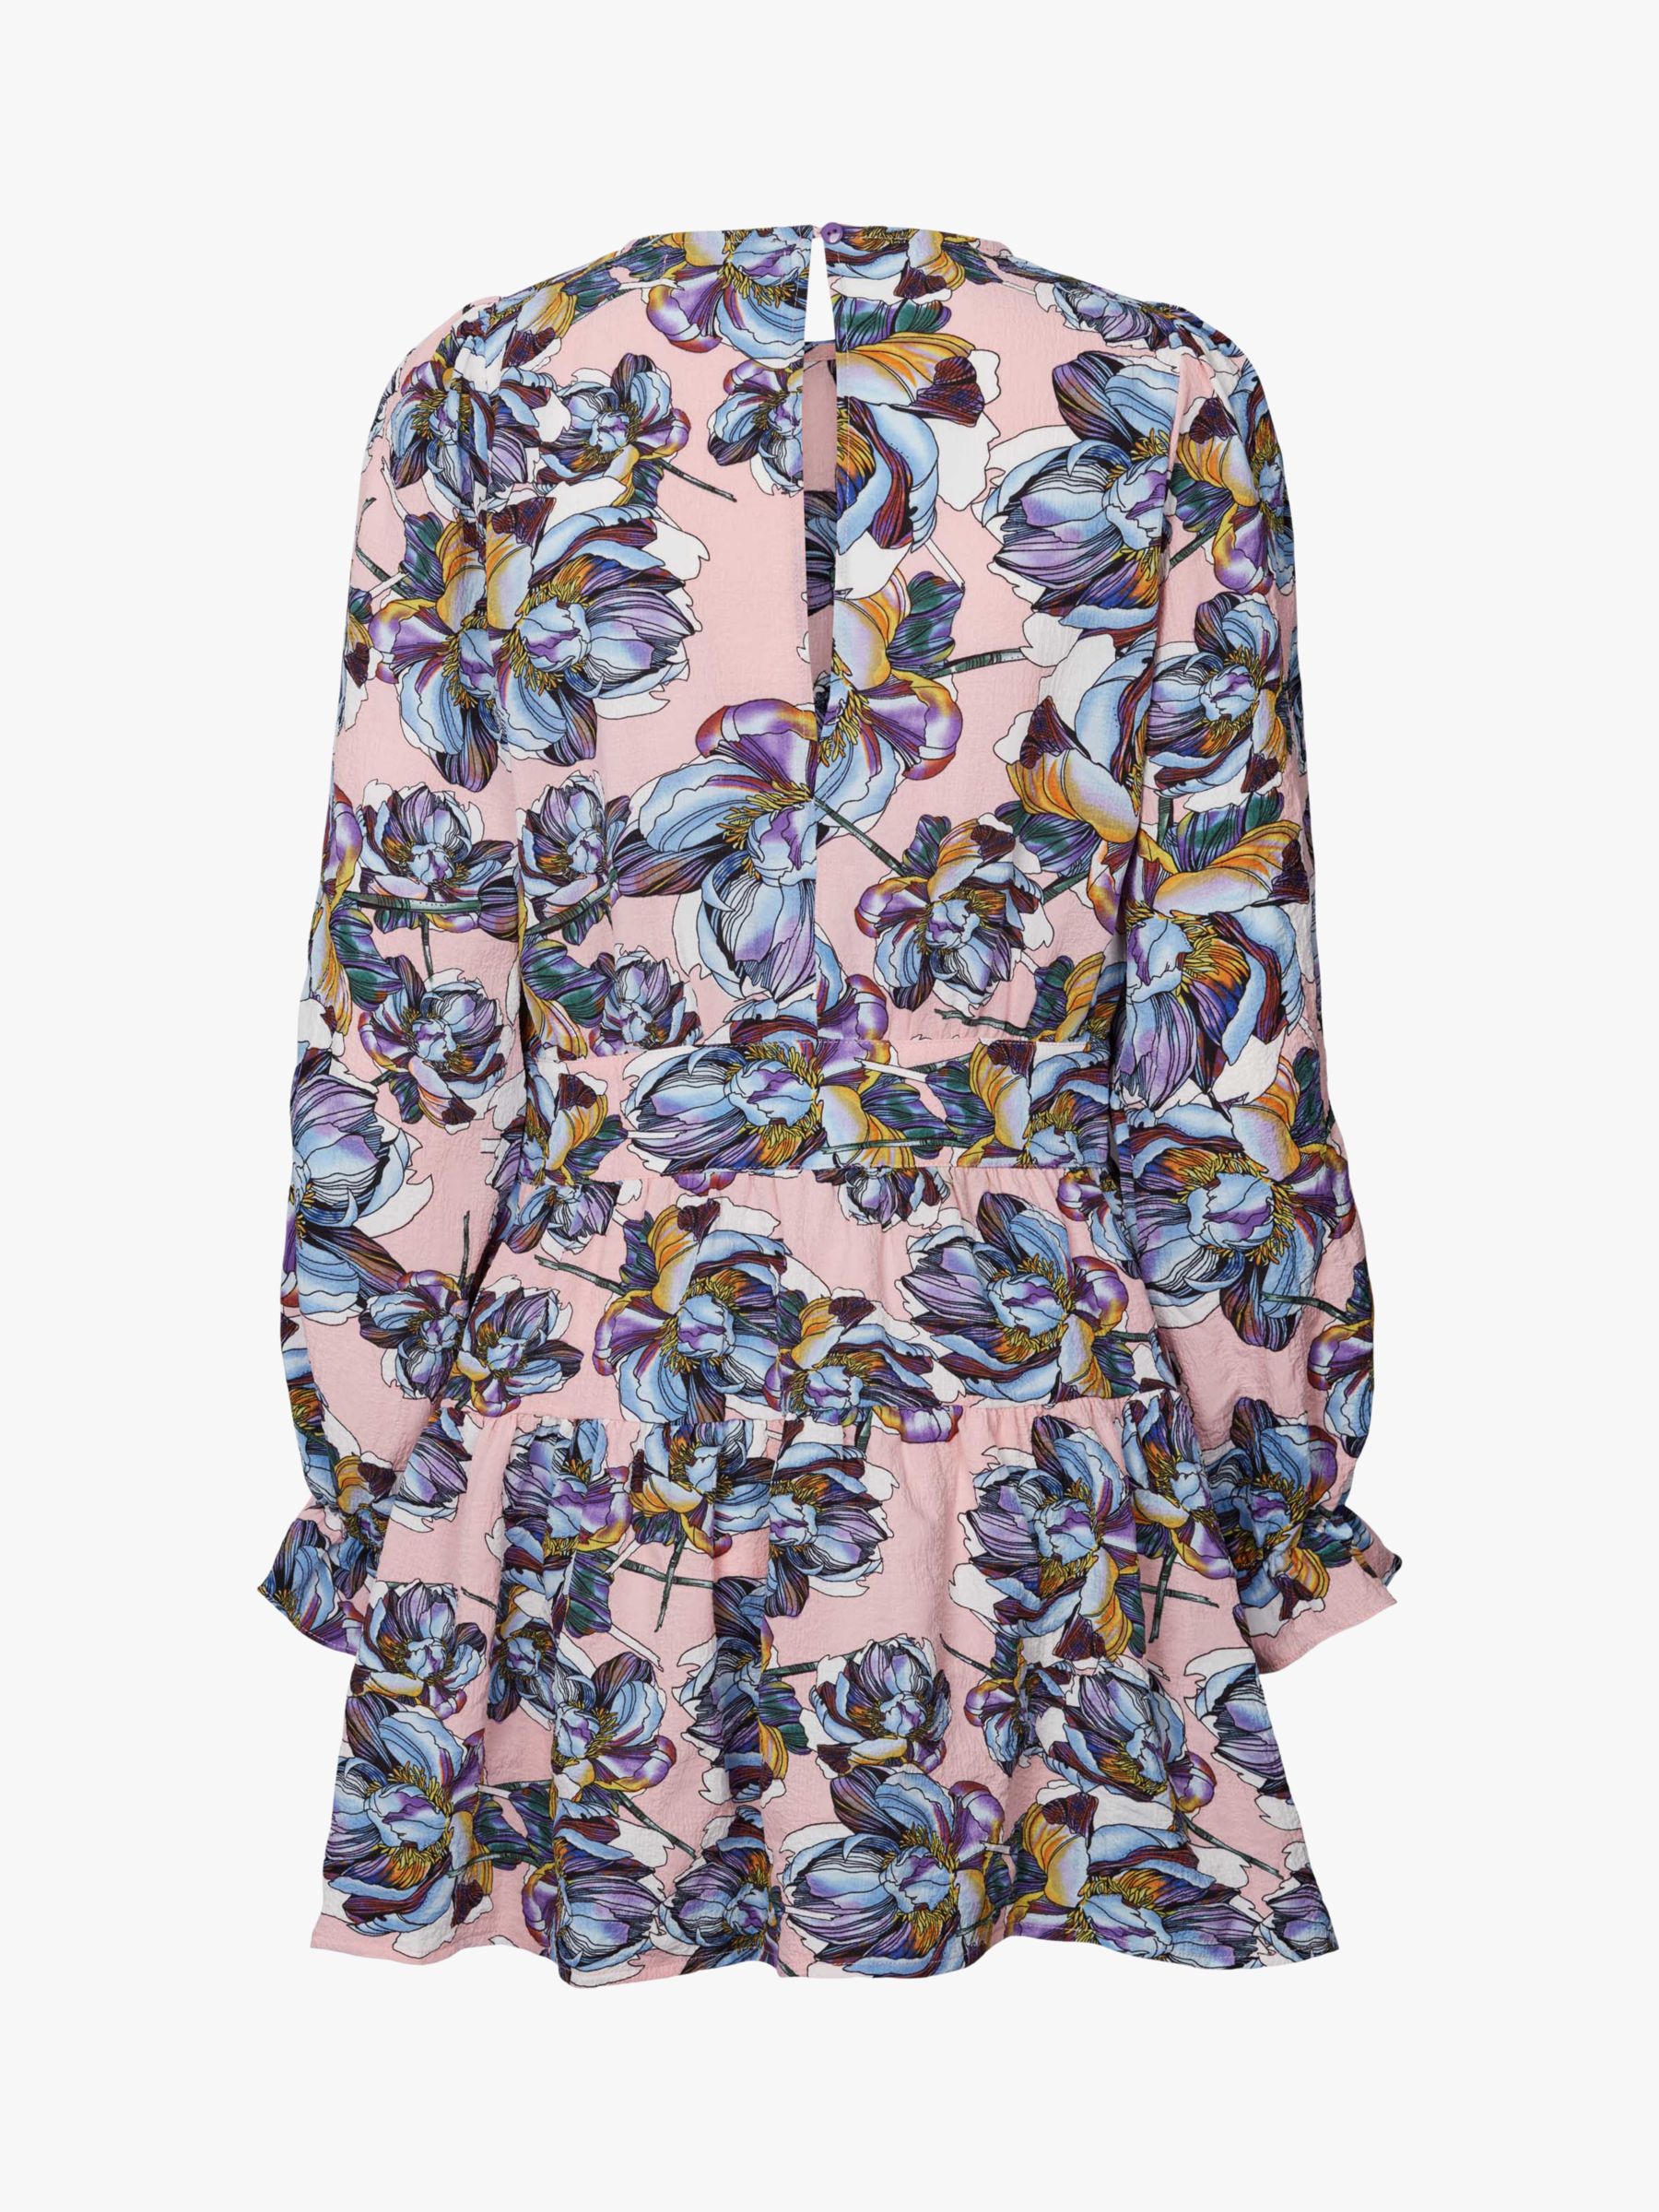 Lollys Laundry Parina Floral Print Mini Dress, Lilac/Multi, S